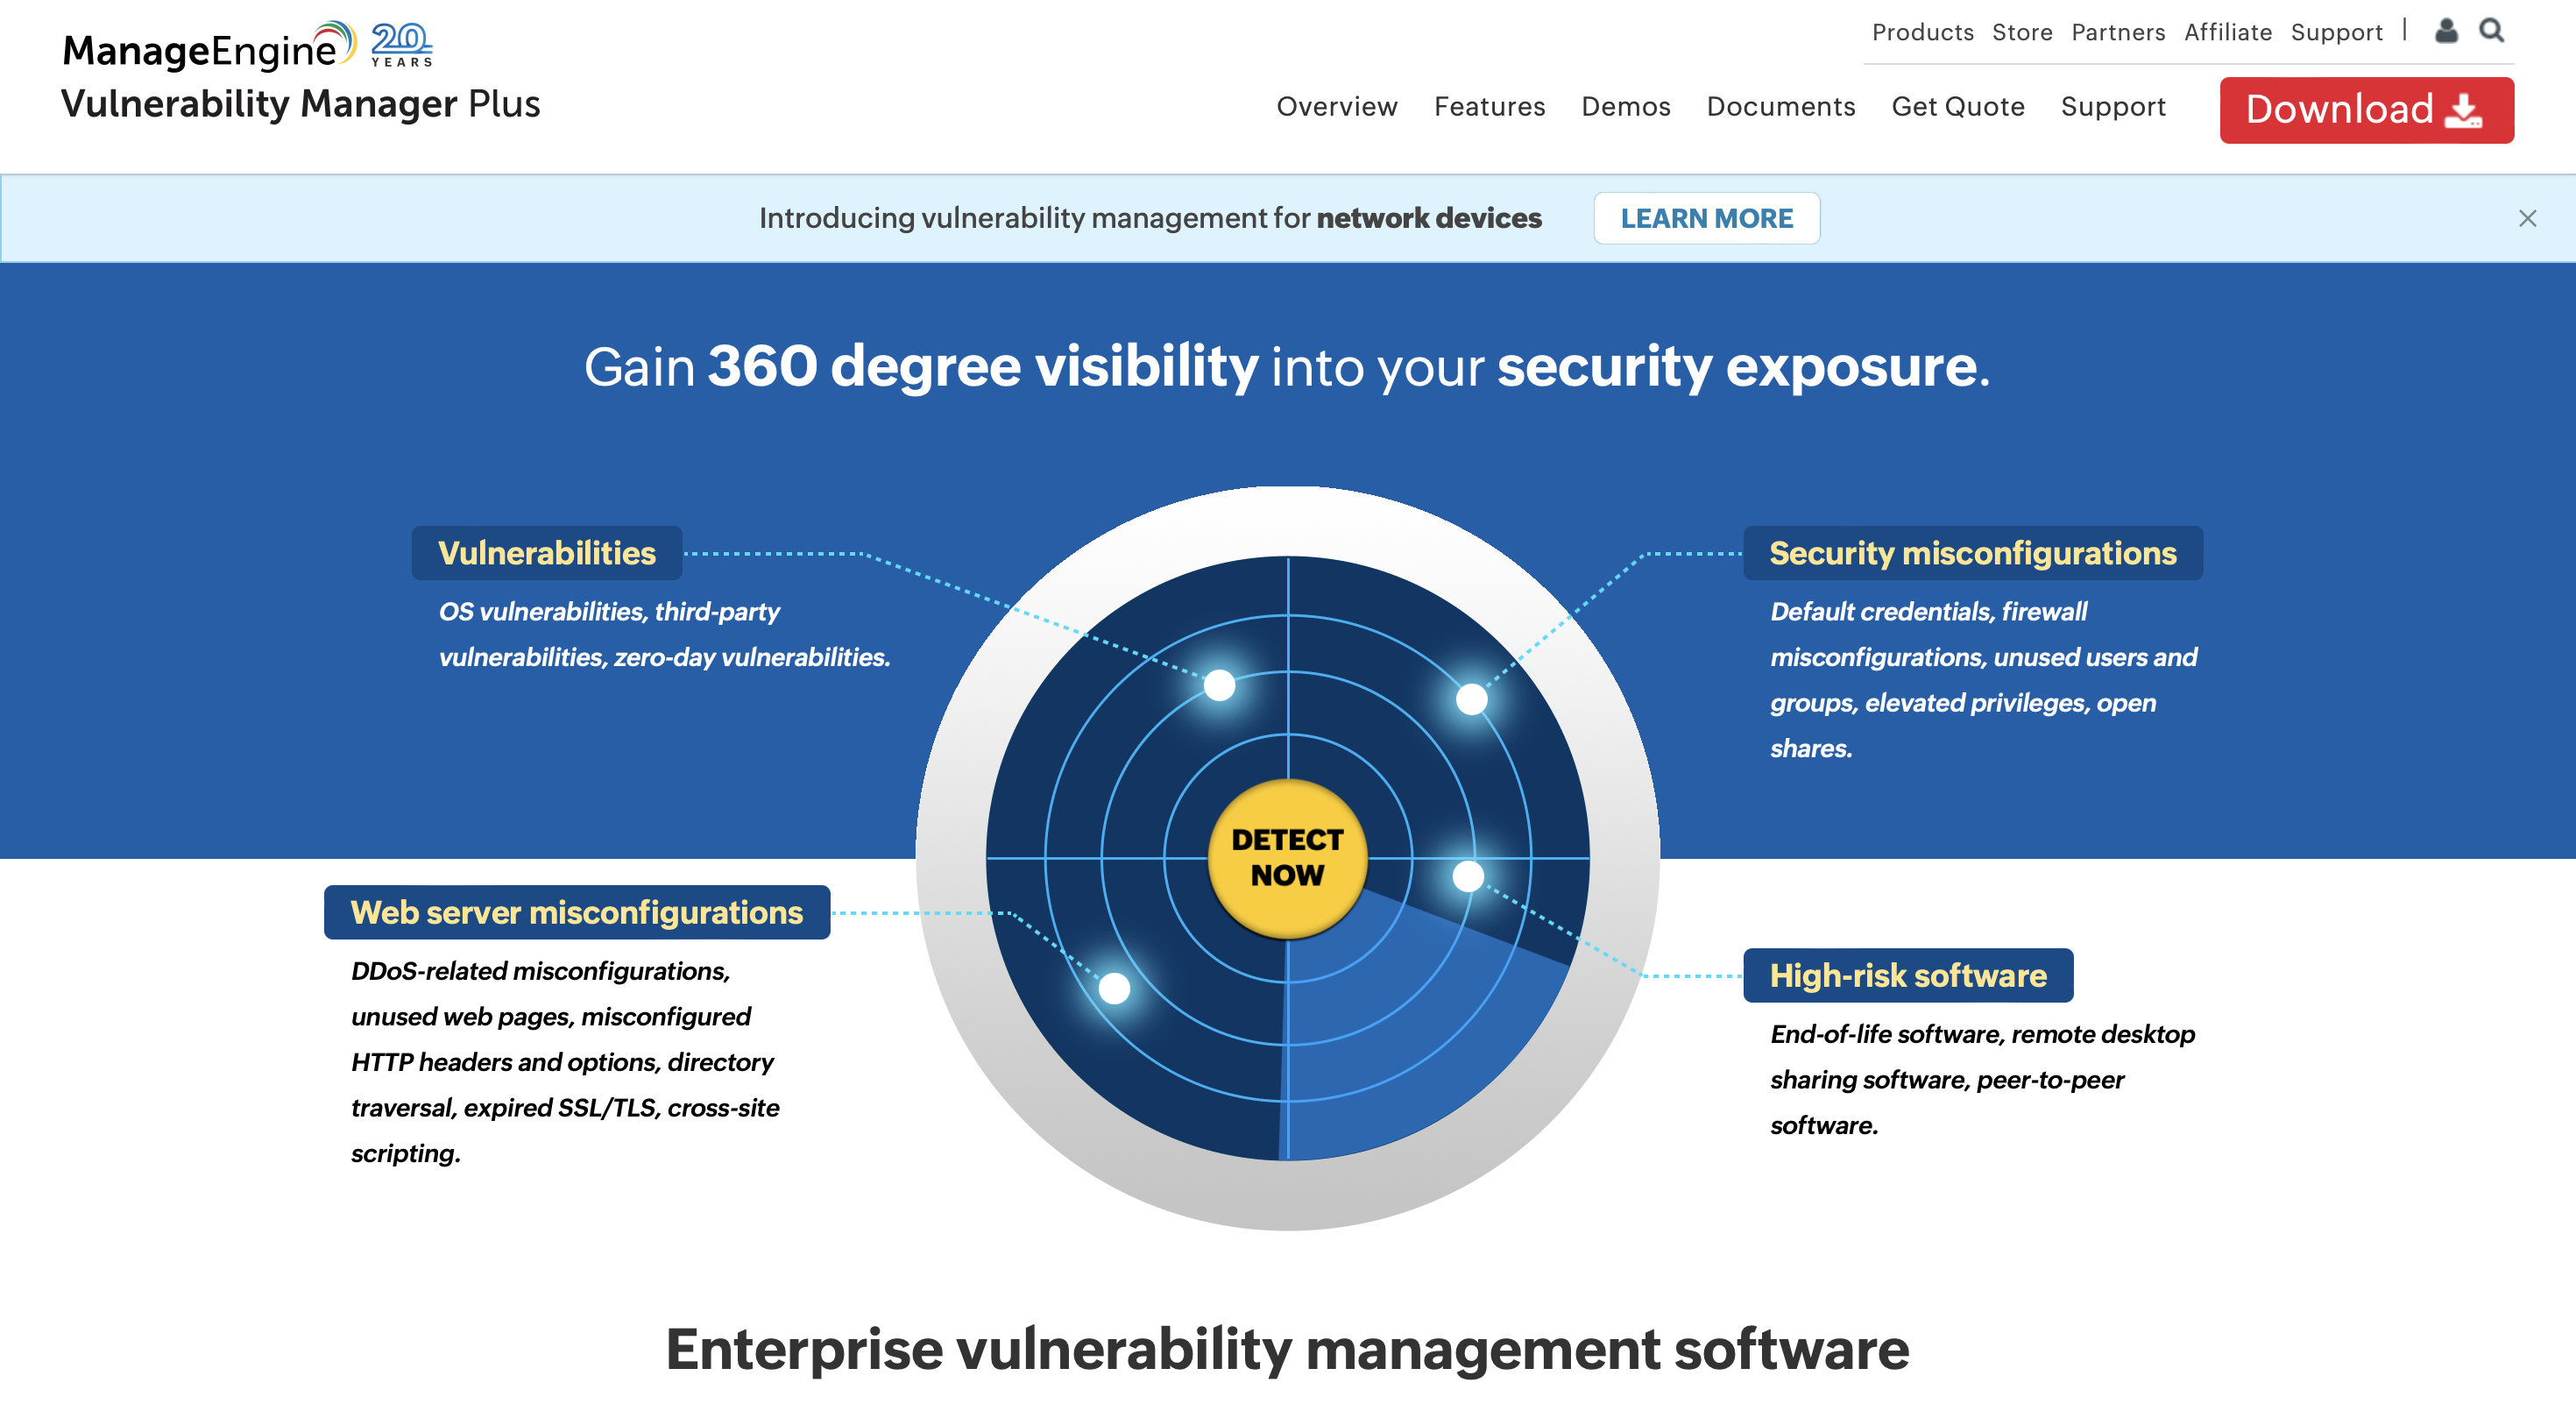 I-Vulnerability Manager Plus